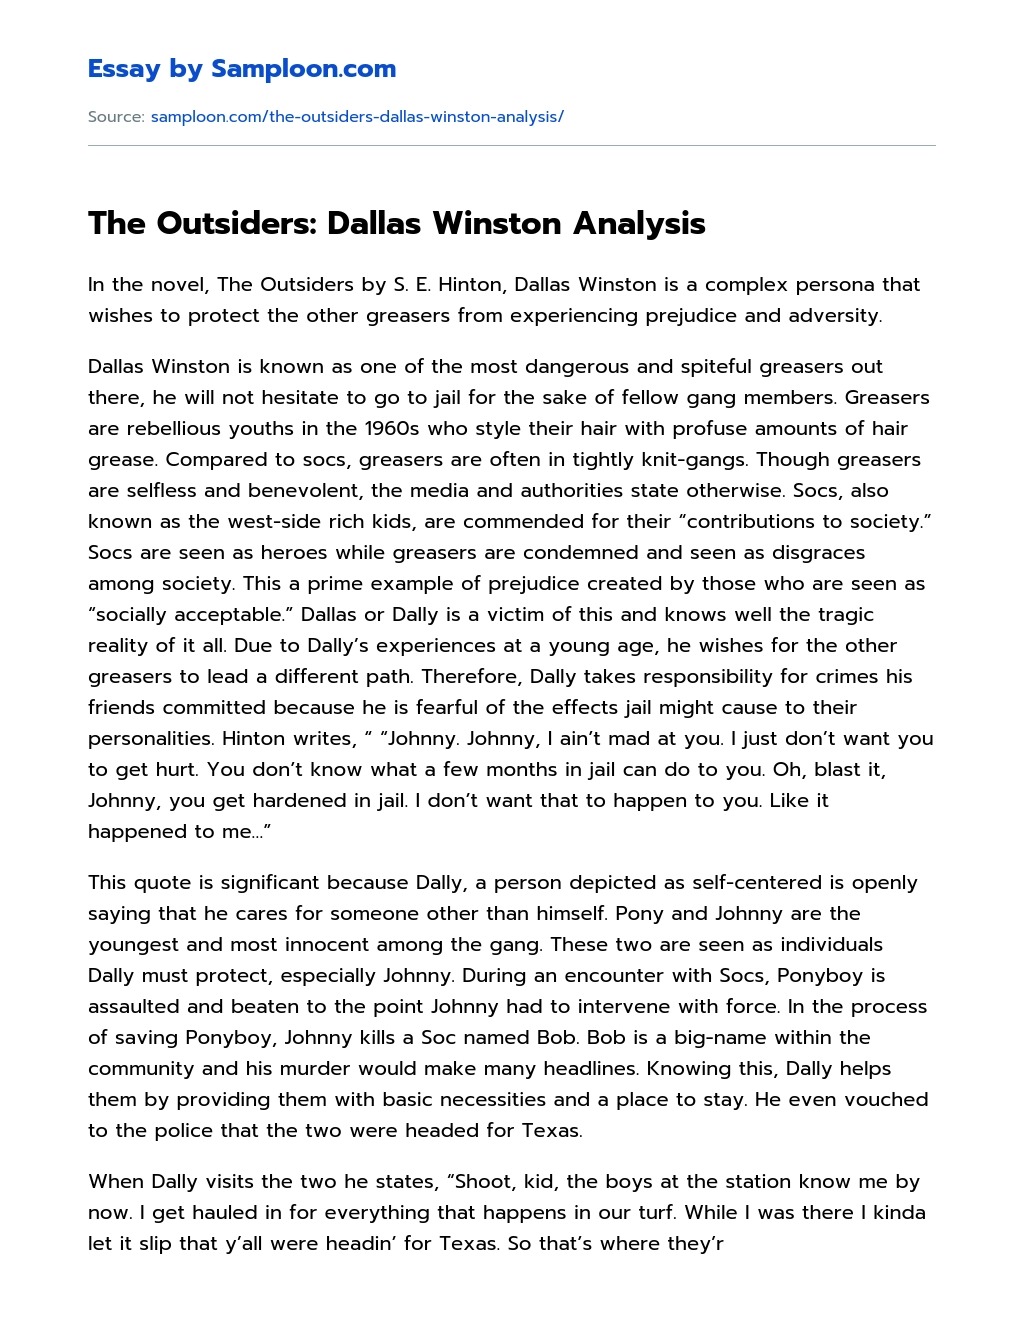 The Outsiders: Dallas Winston Analysis essay